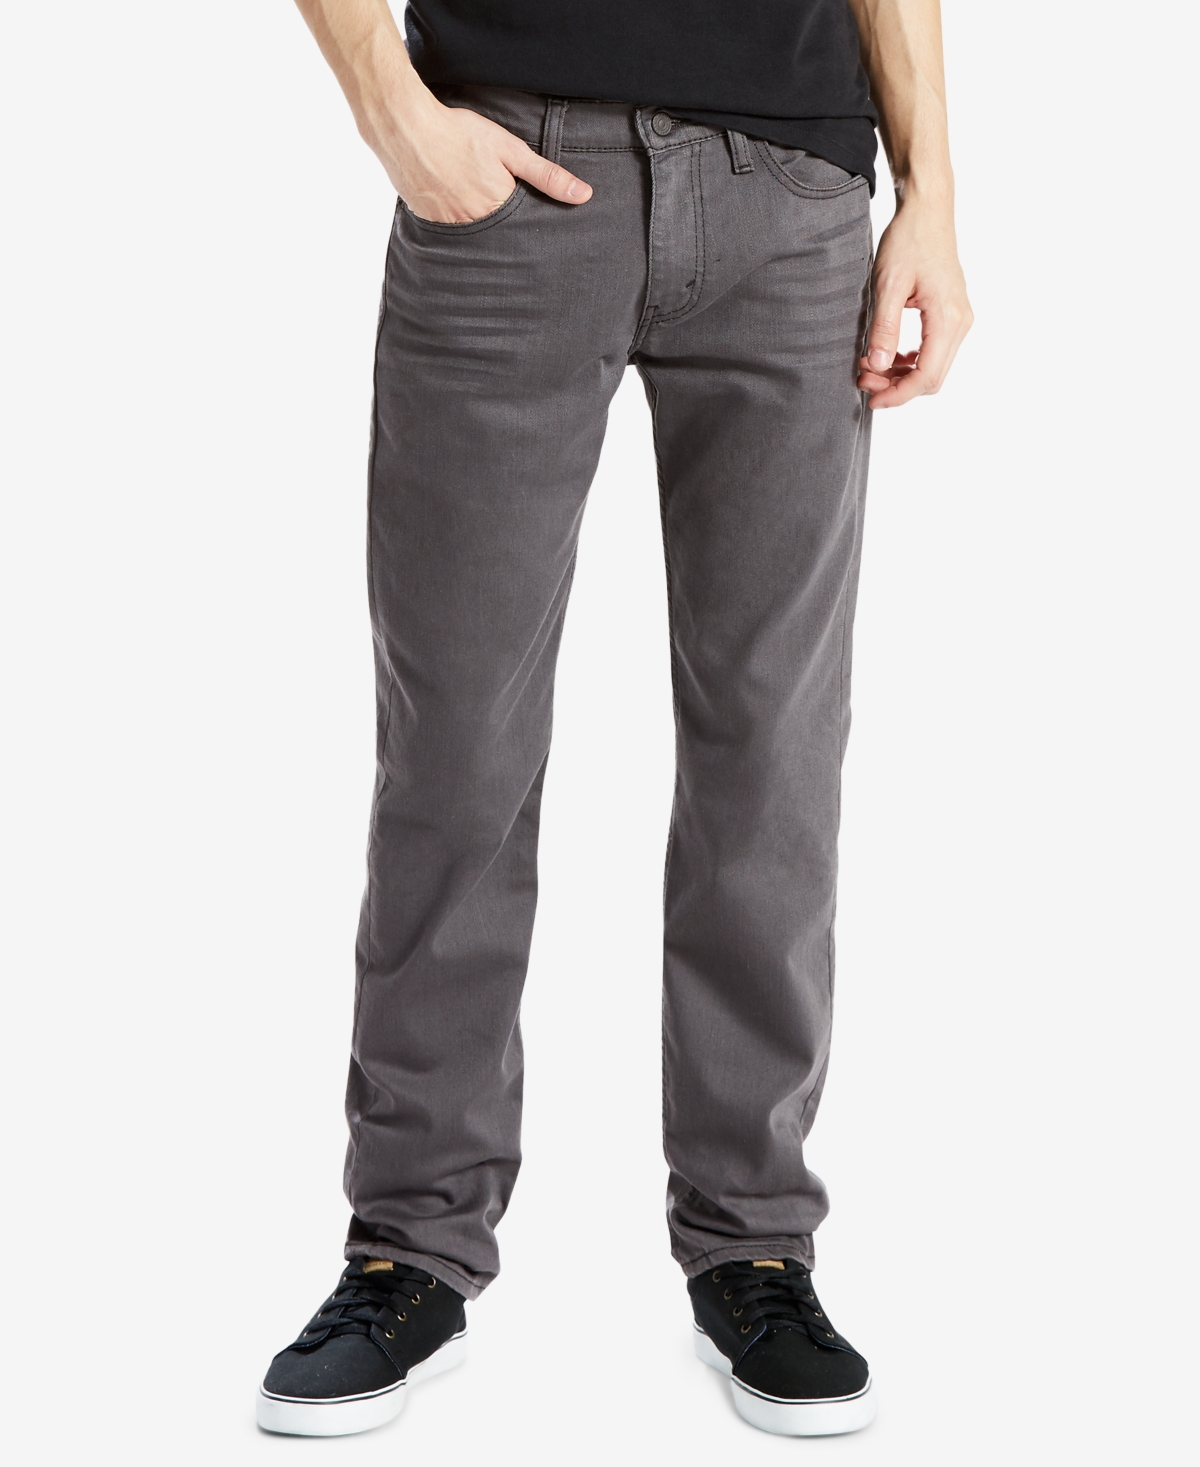 UPC 190416414277 product image for Levi's Men's 511 Slim Fit Jeans | upcitemdb.com